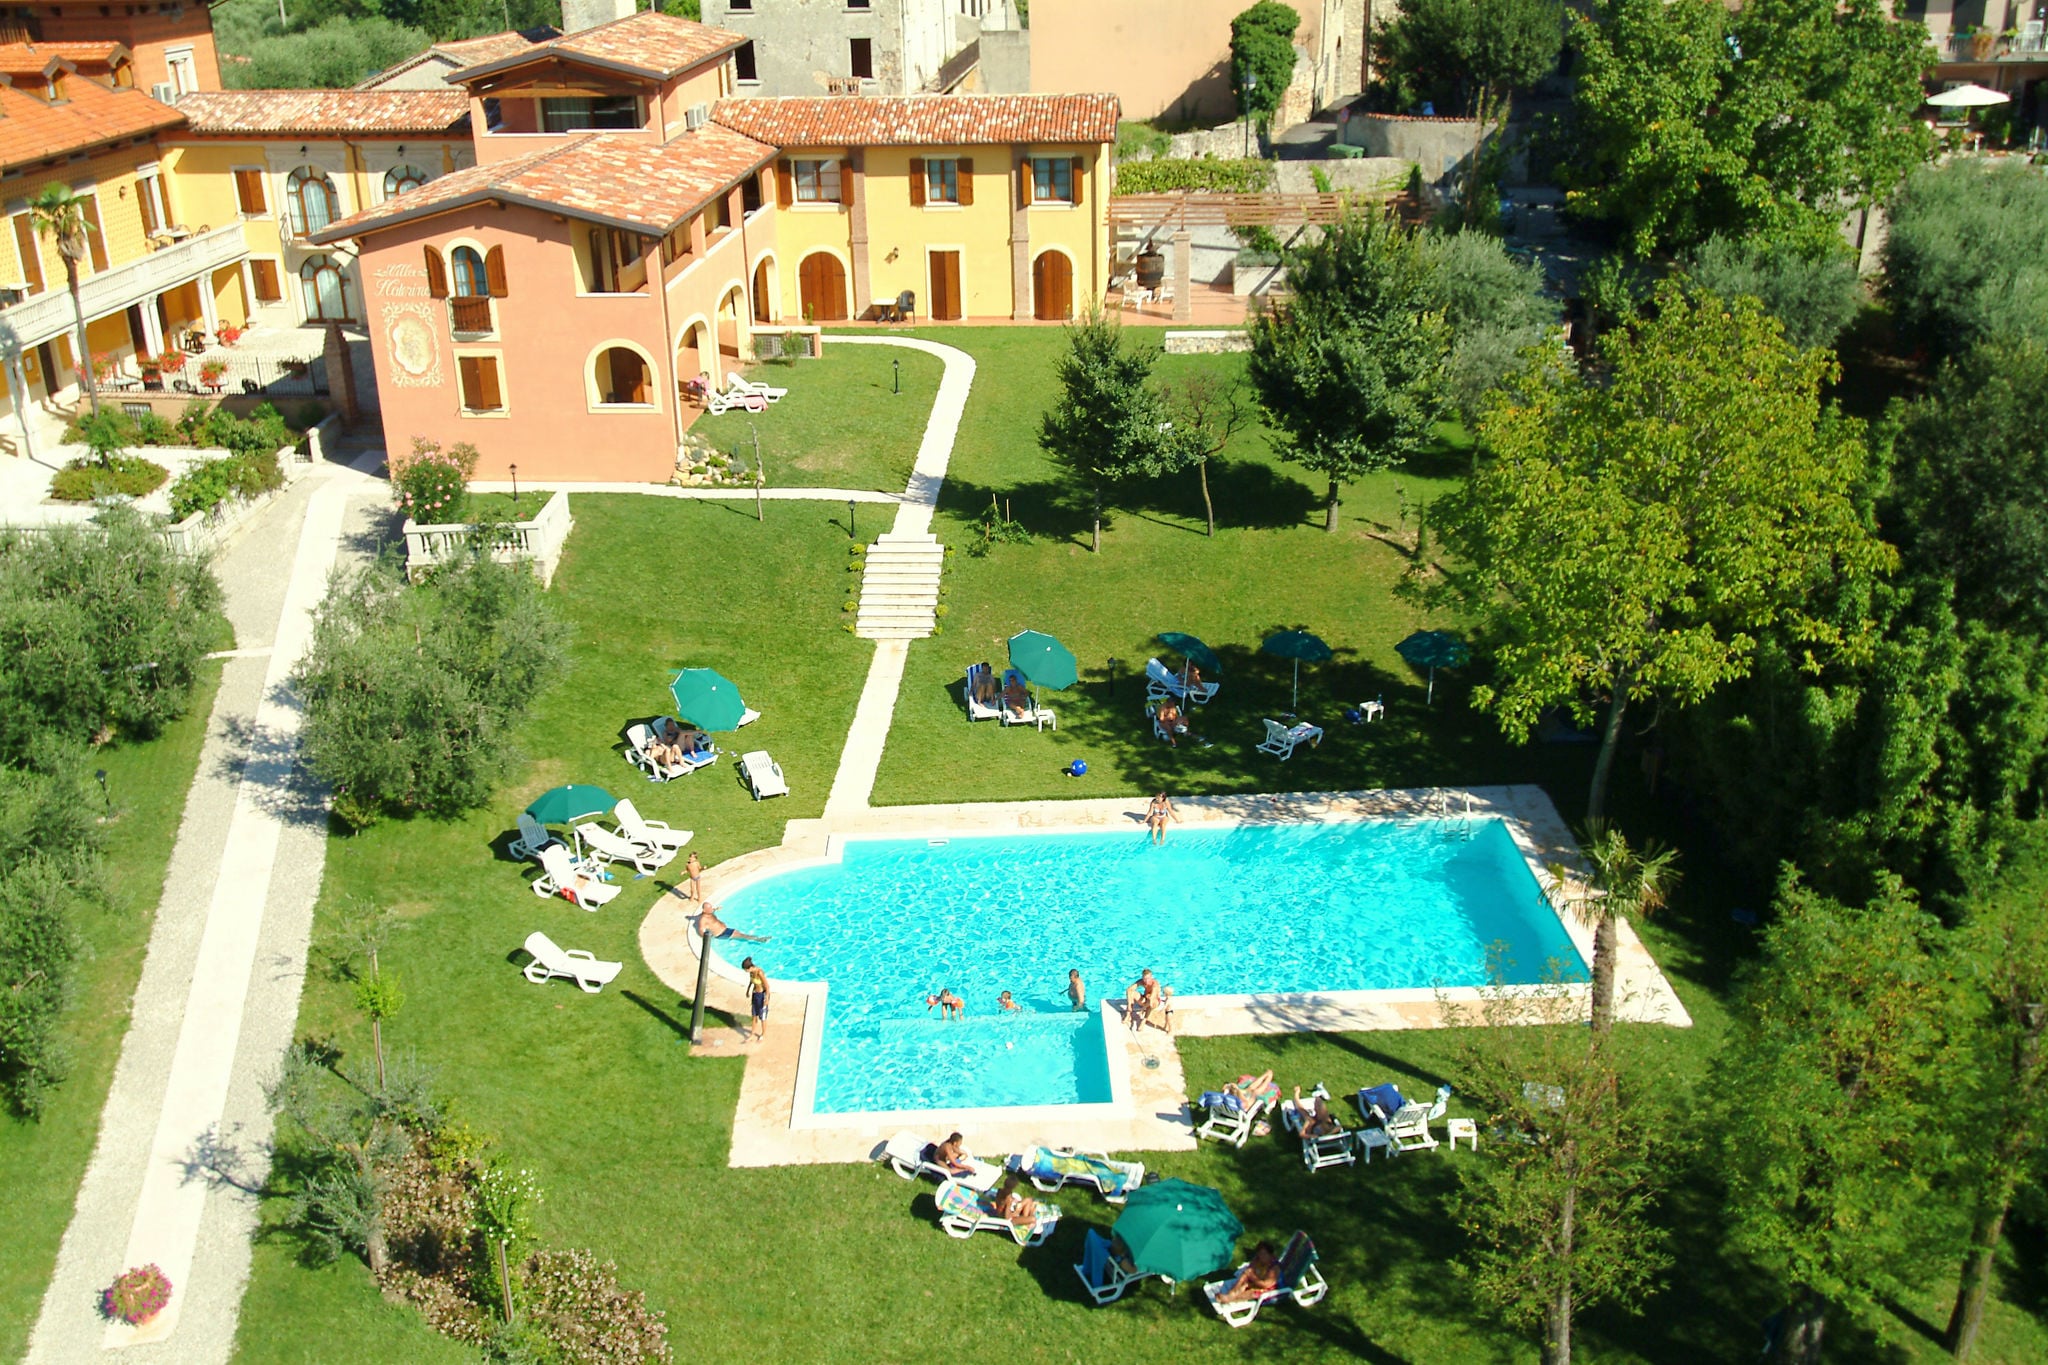 Maison de vacances confortable à Manerba del Garda, piscine